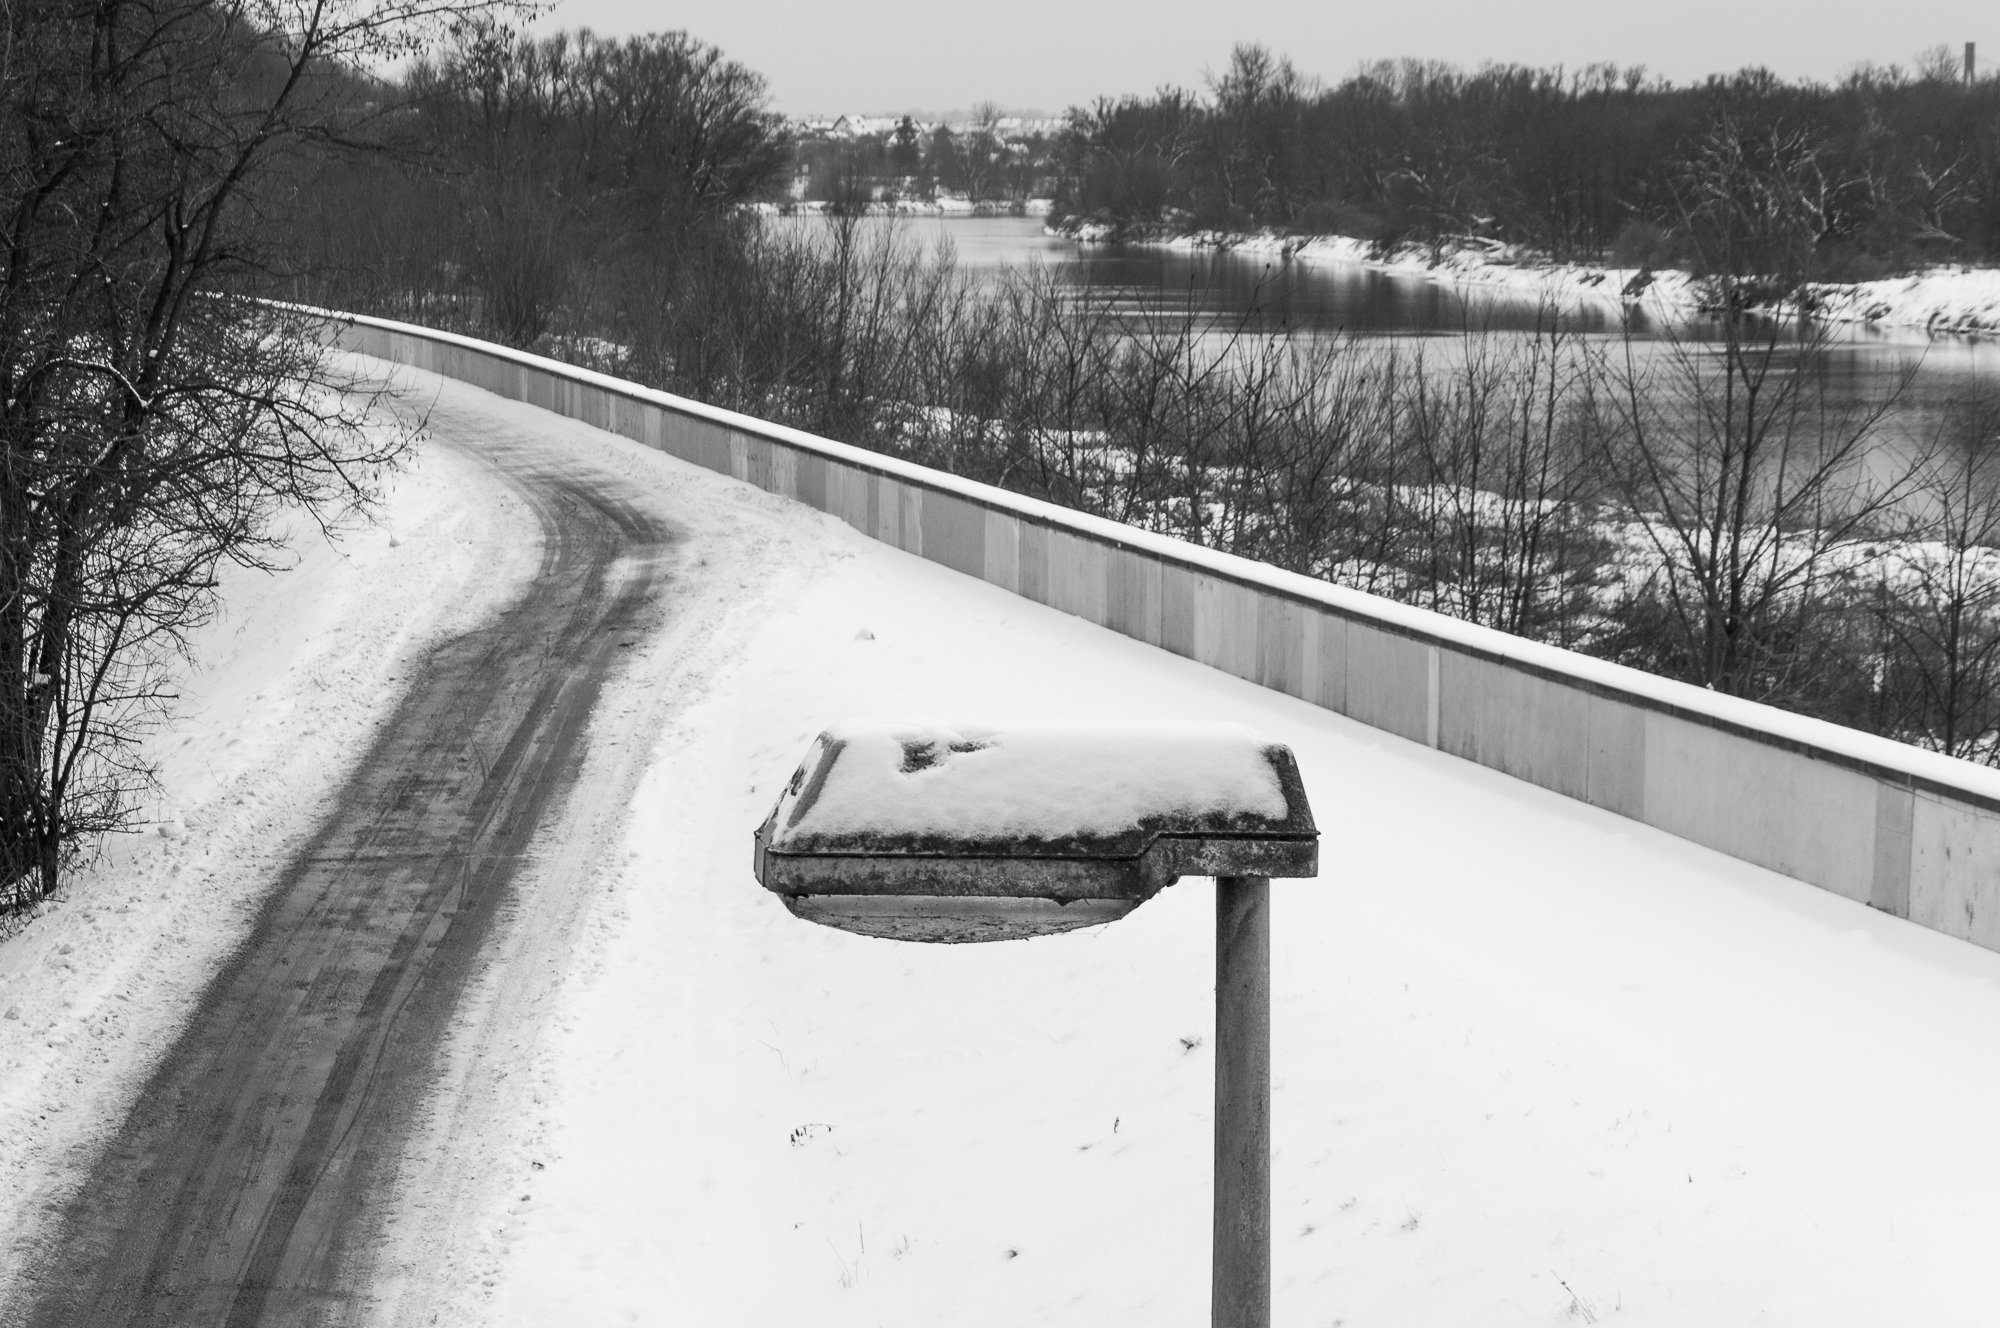 Adam Mazek Photography Krakow 2021. Post: "Chilling cold." Minimalism. Street lamp and snow.